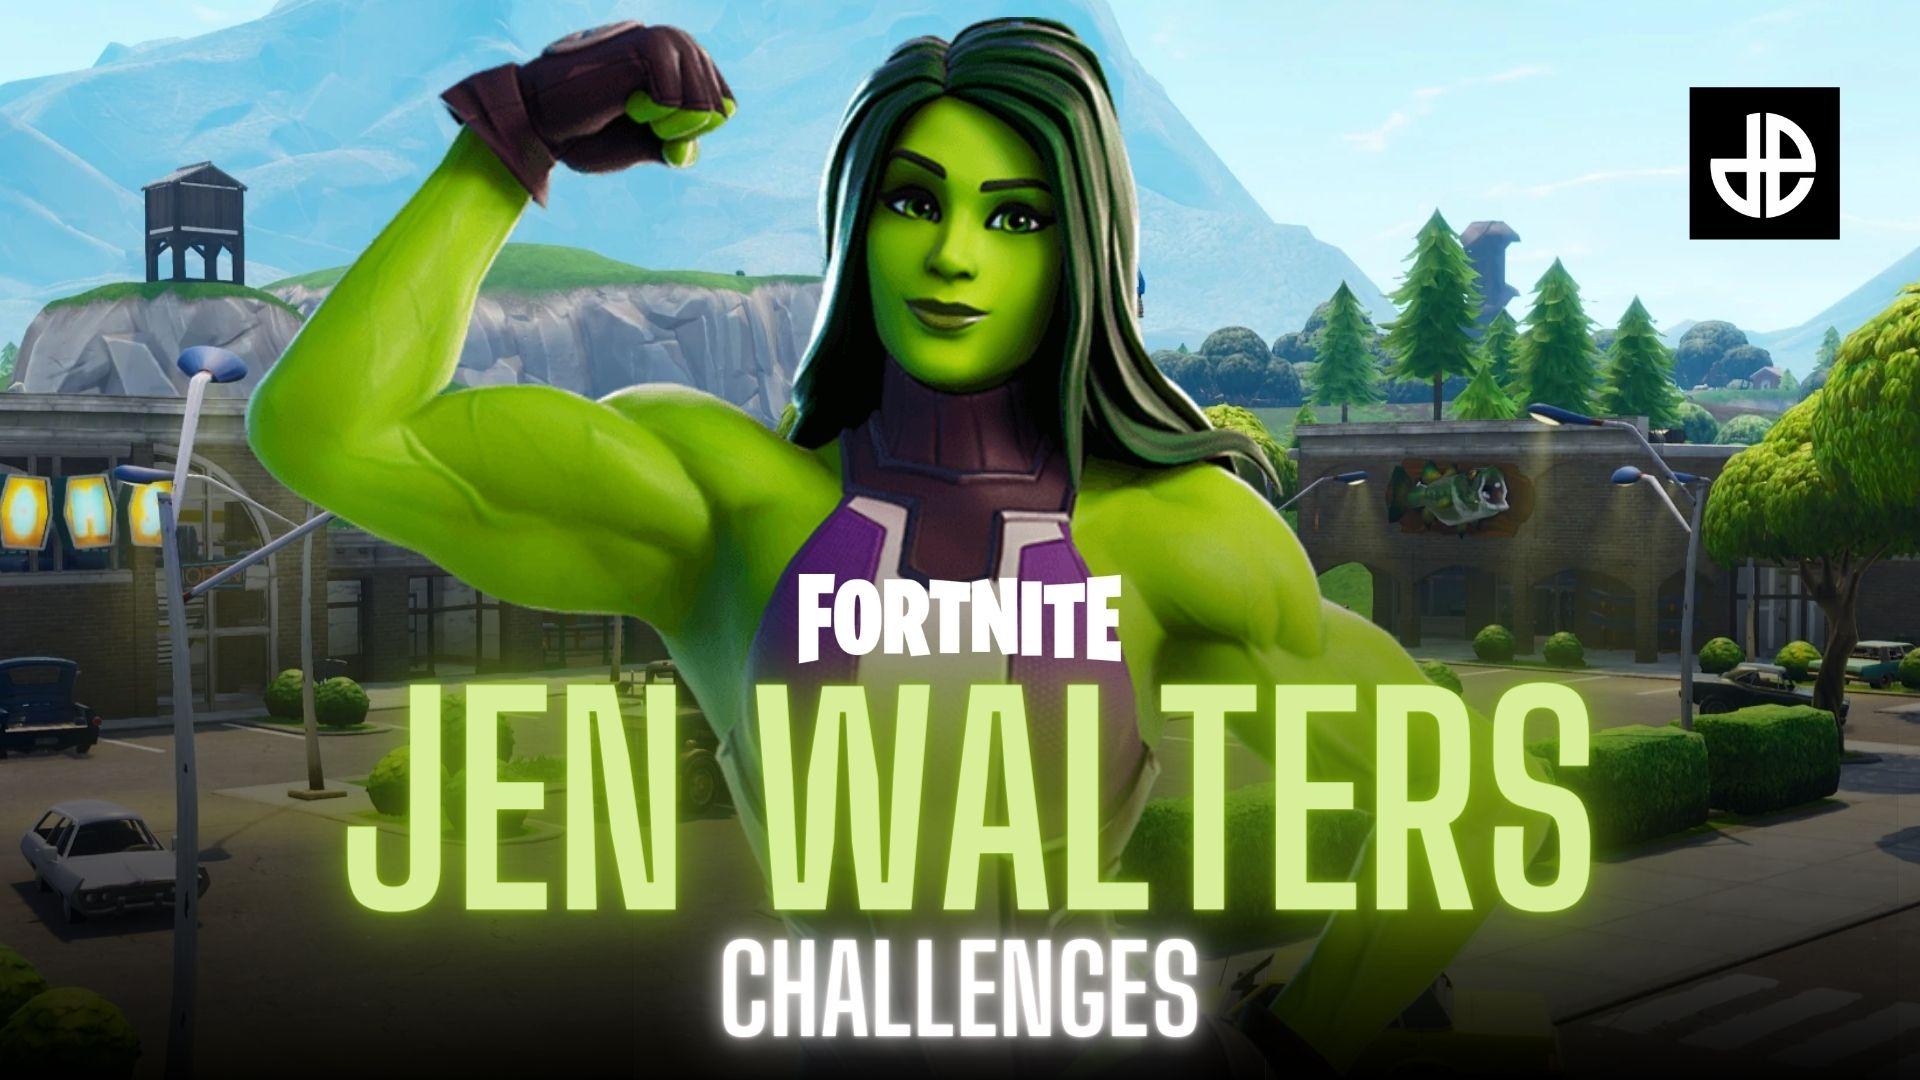 Jennifer Walters Fortnite She-Hulk challenges